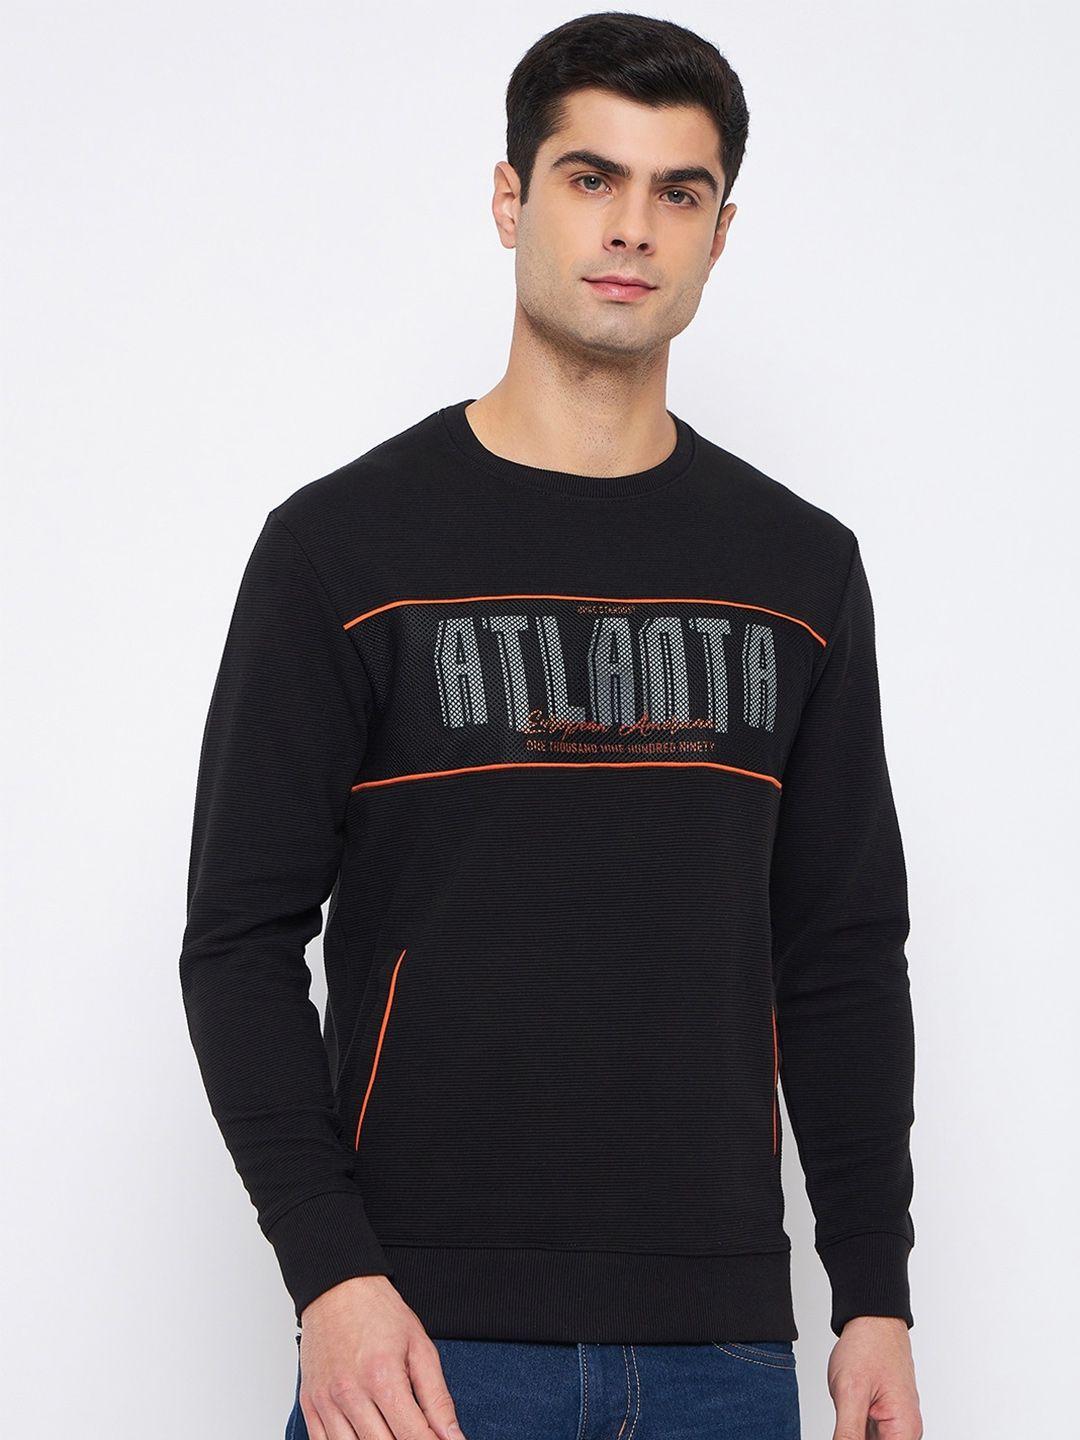 duke alphanumeric printed cotton pullover sweatshirt